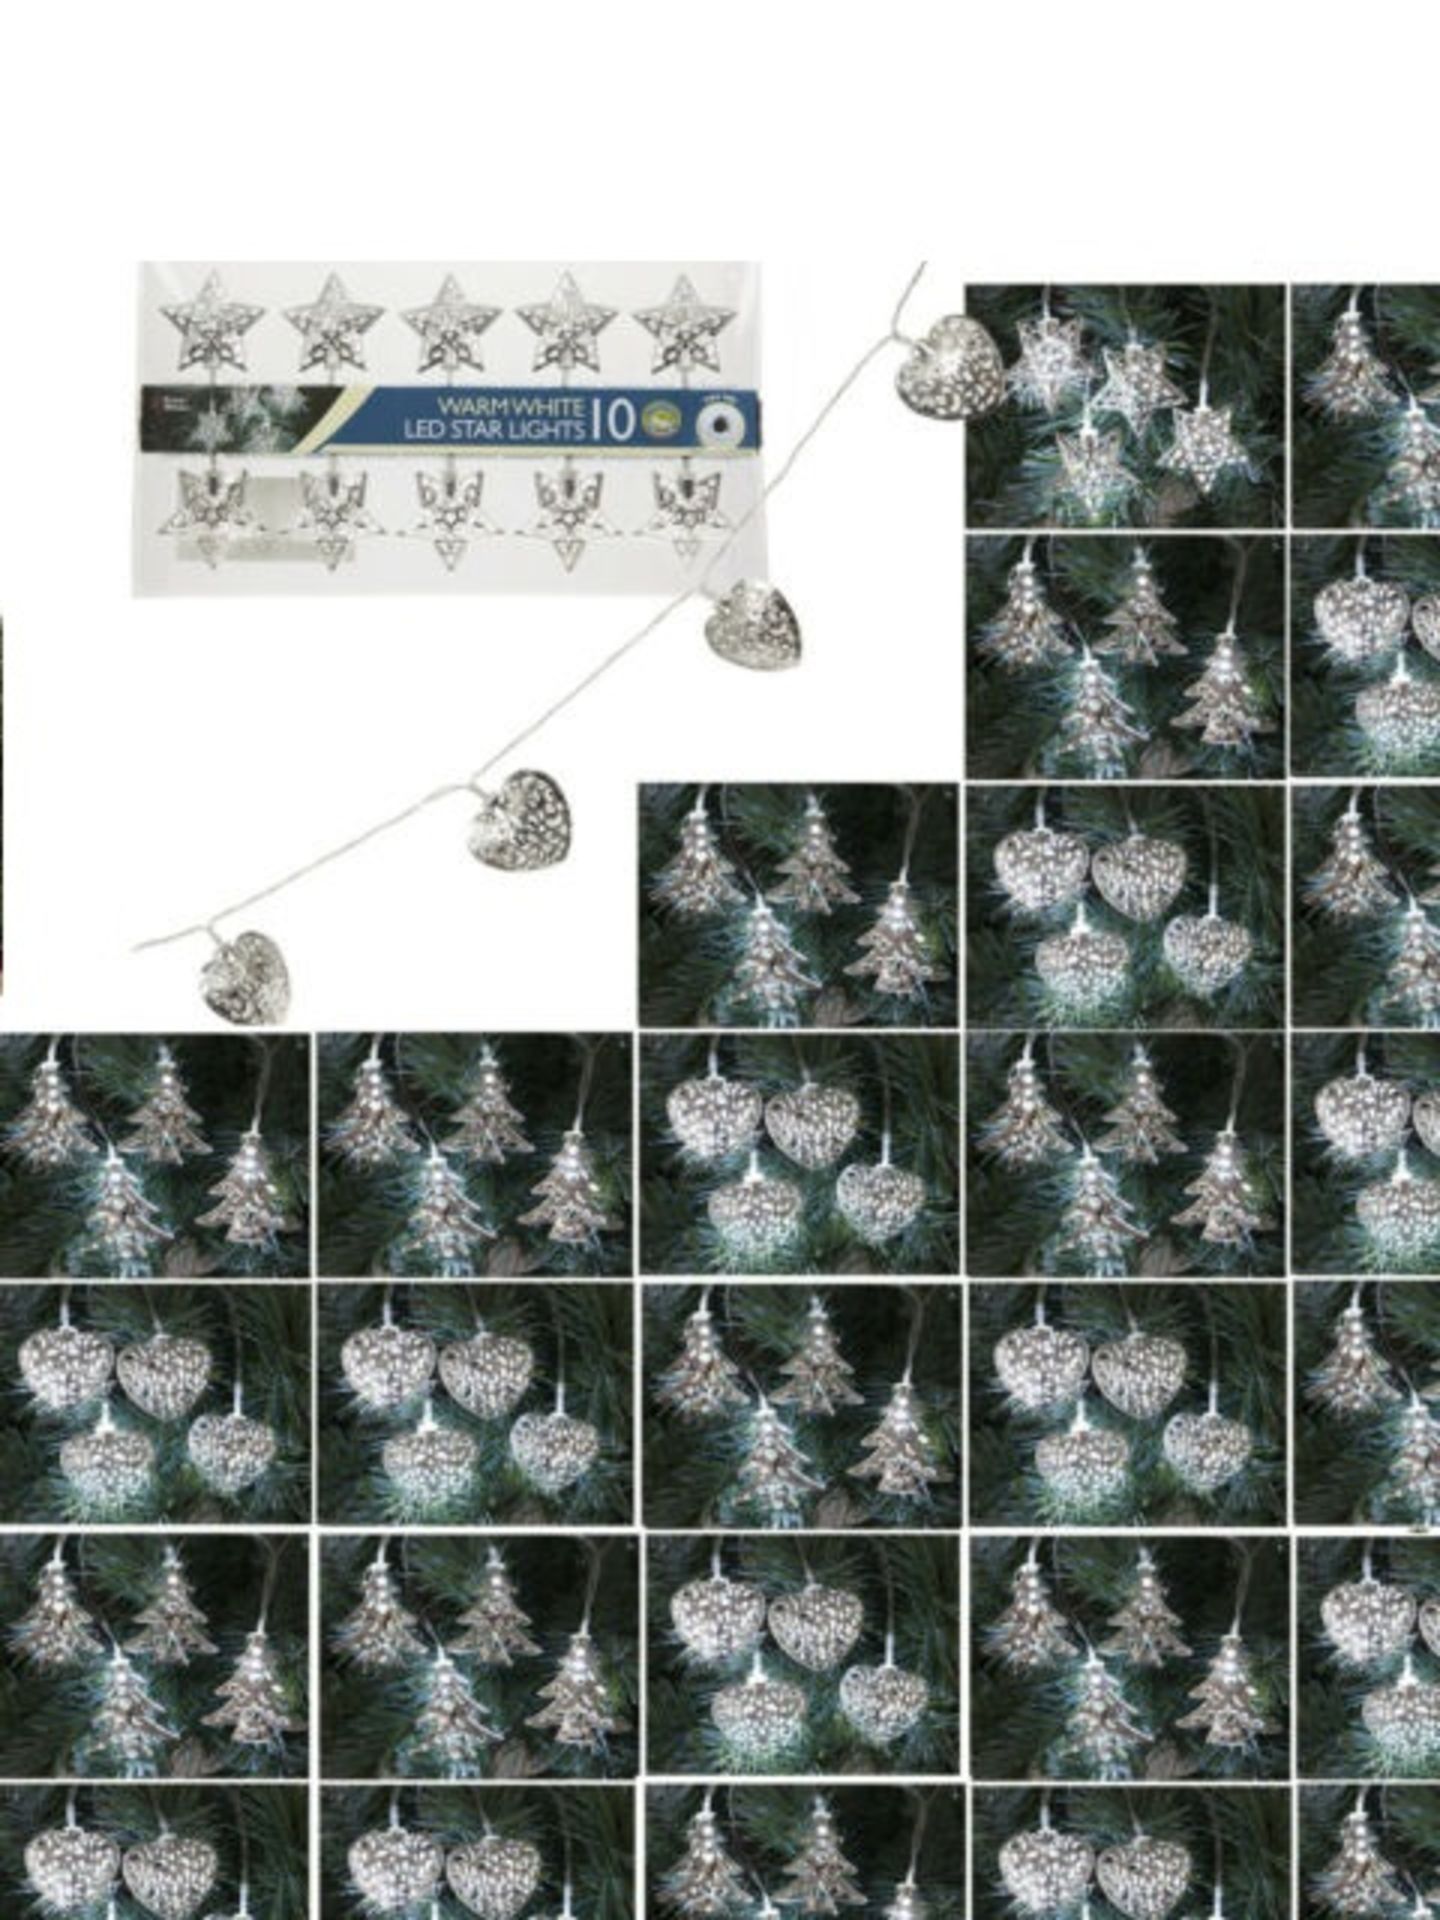 + VAT Brand New 10 LED Decorative Christmas Lights - 3 Assorted Designs - Image 2 of 2